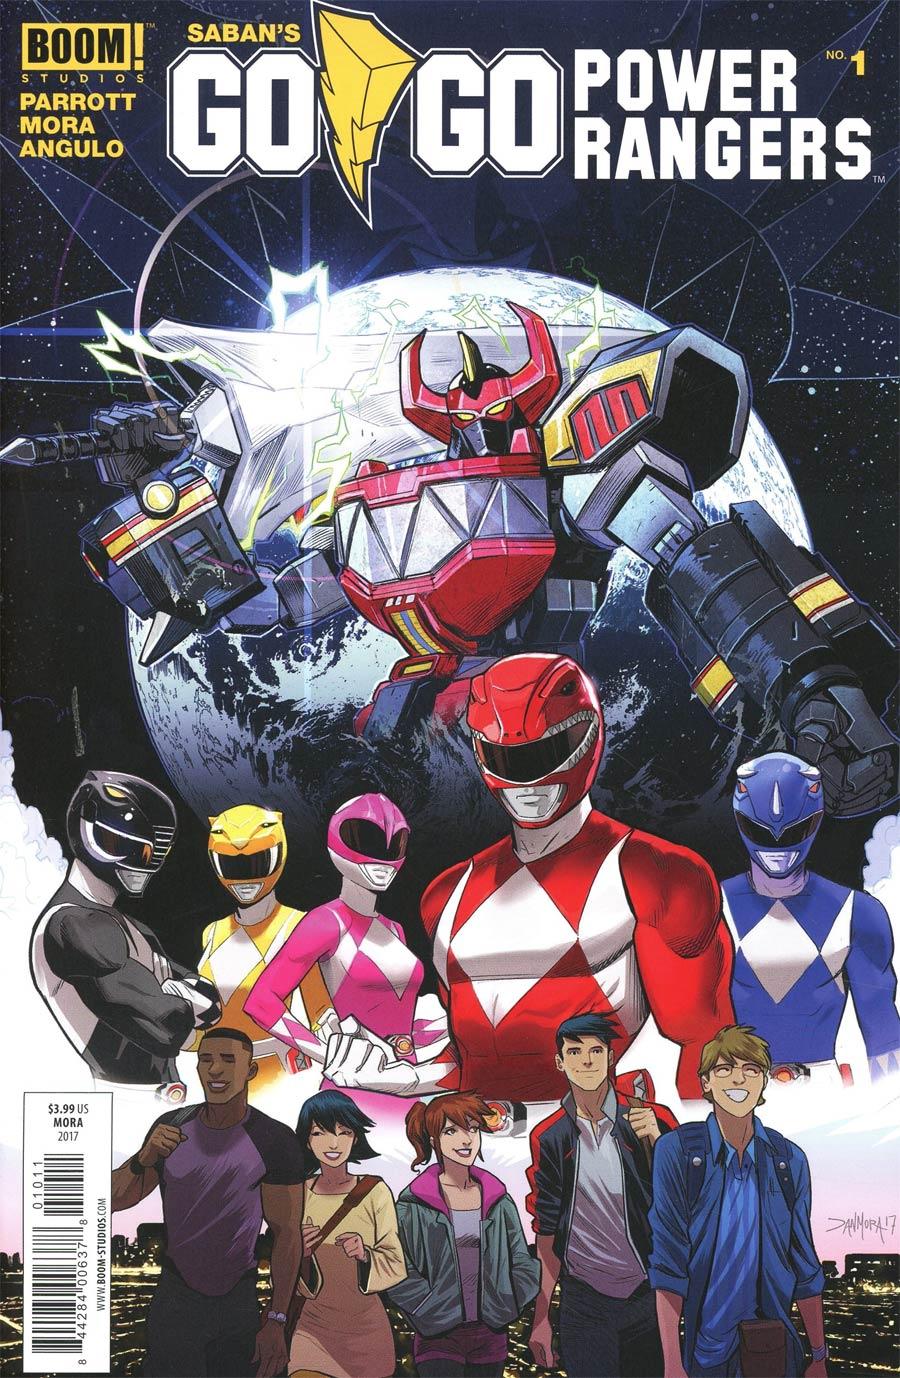 Sabans Go Go Power Rangers Vol. 1 #1